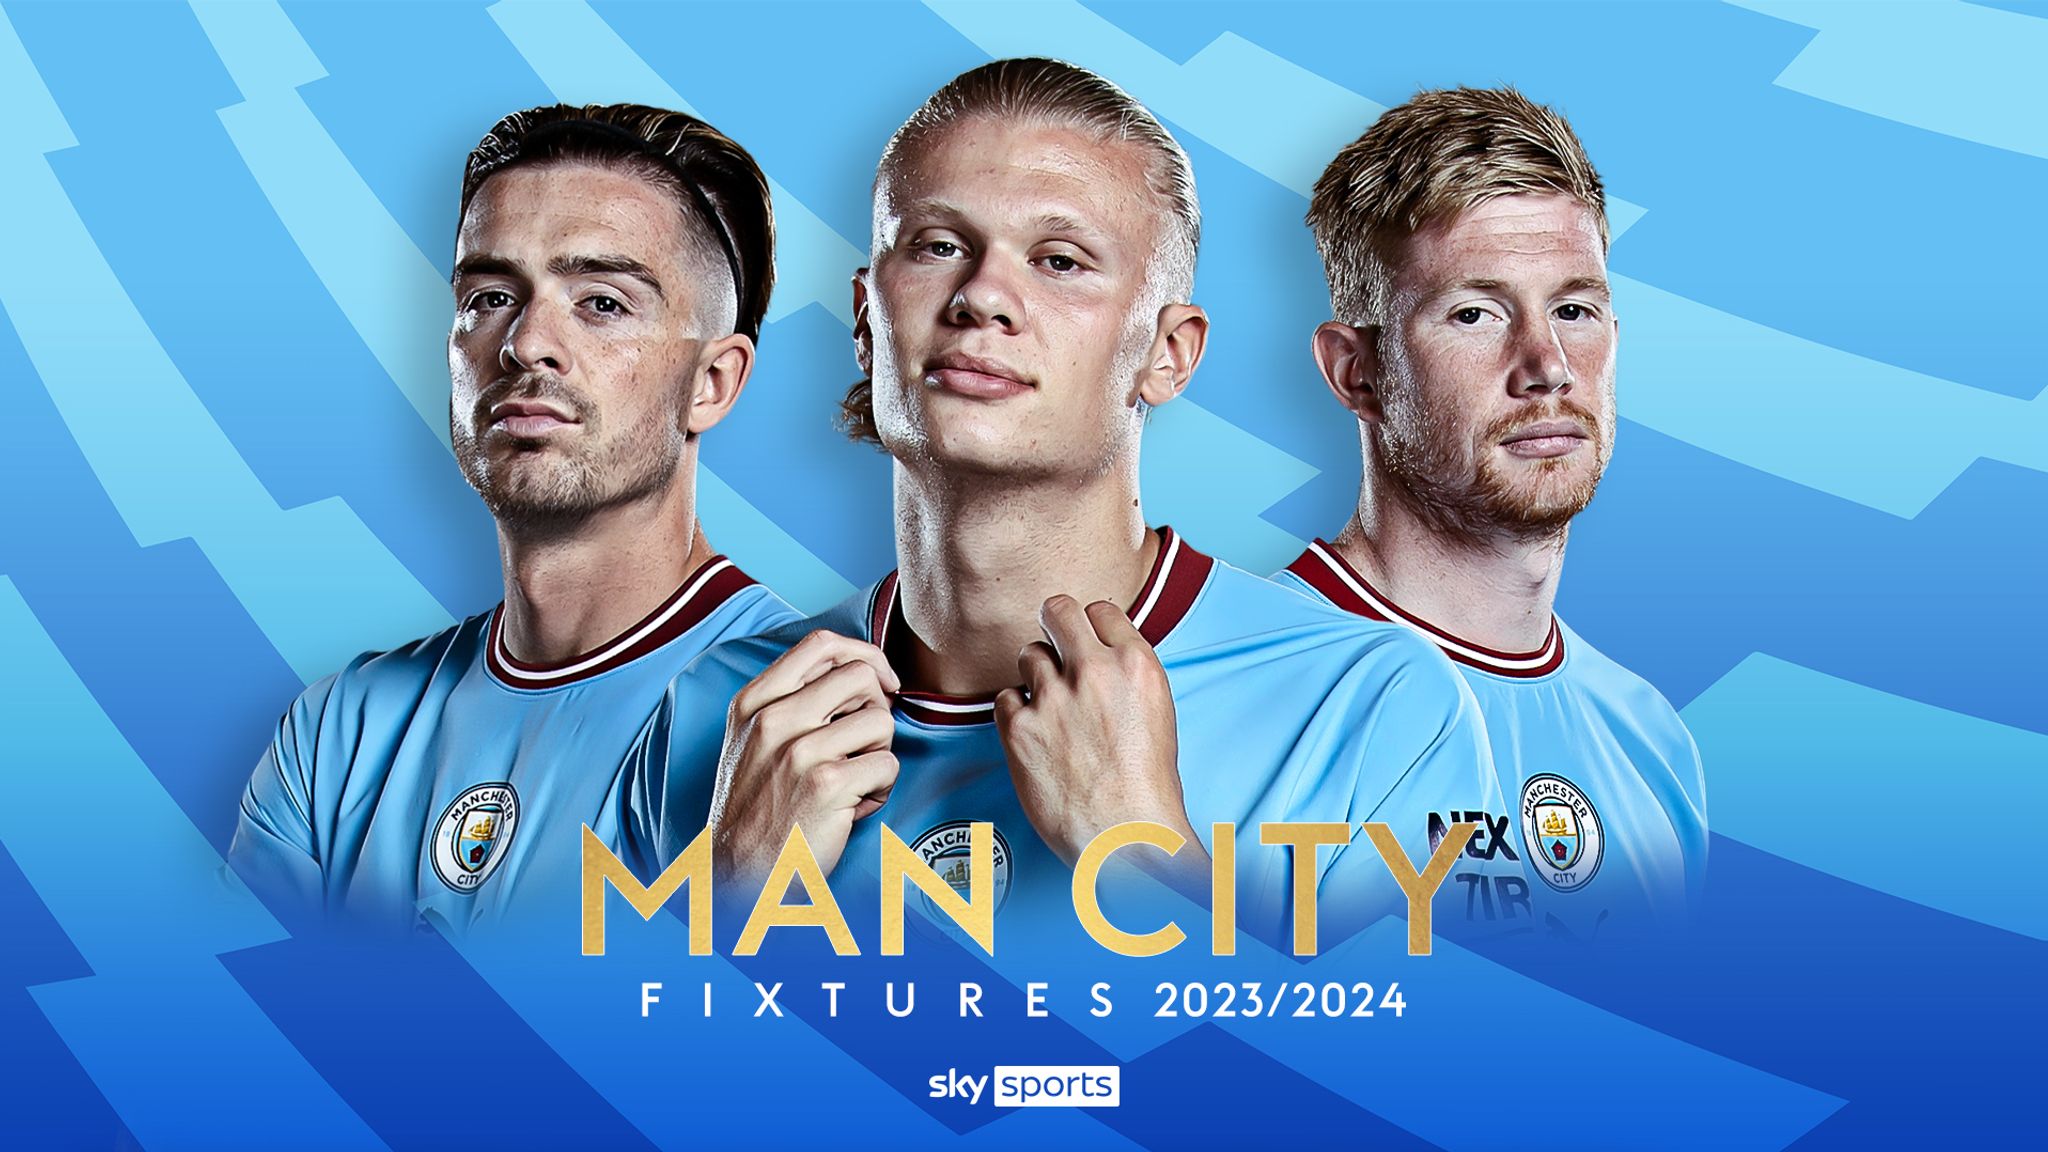 Man City Premier League 2023/24 fixtures and schedule Football News Sky Sports